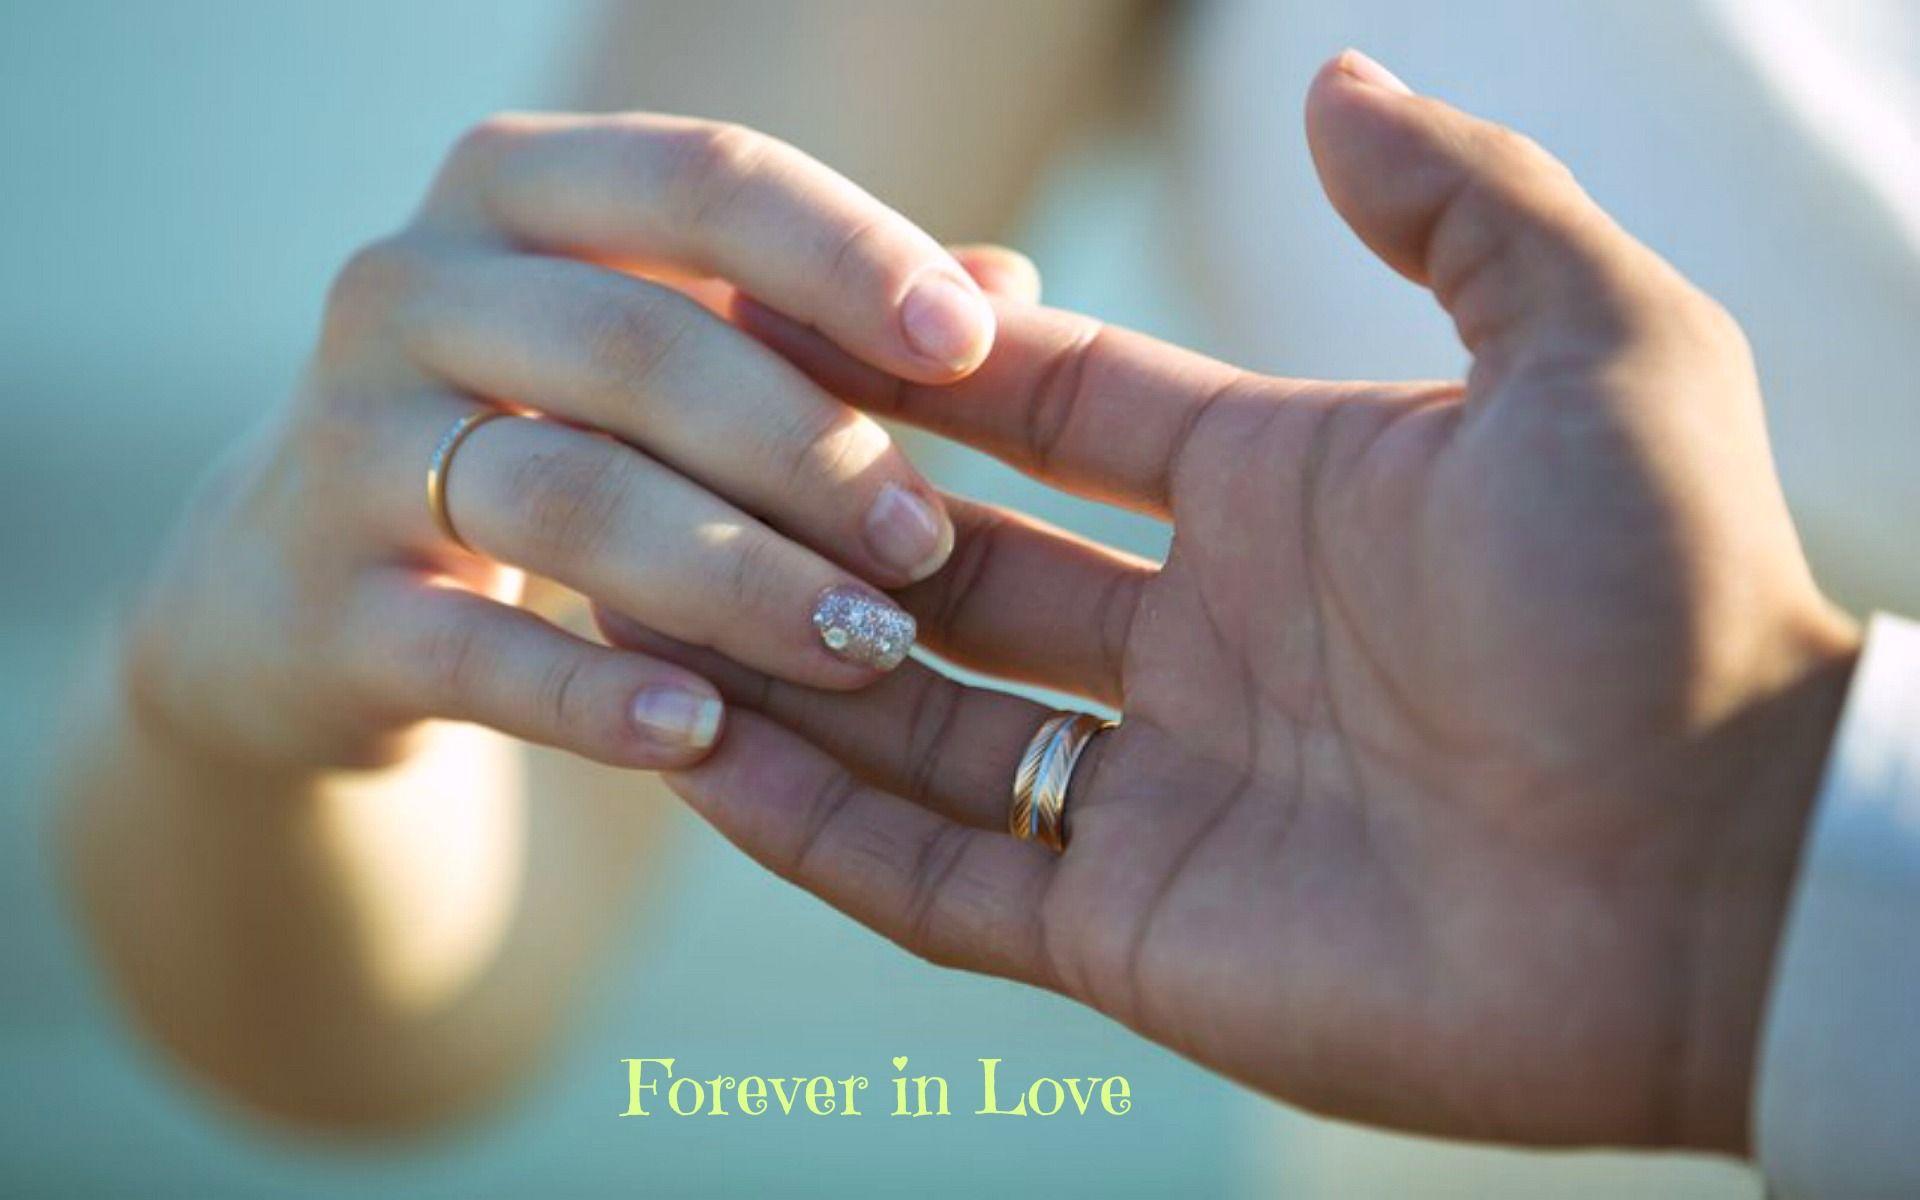 Forever In Love Rings Wedding Hands HD Wallpaper 15, Wallpaper13.com